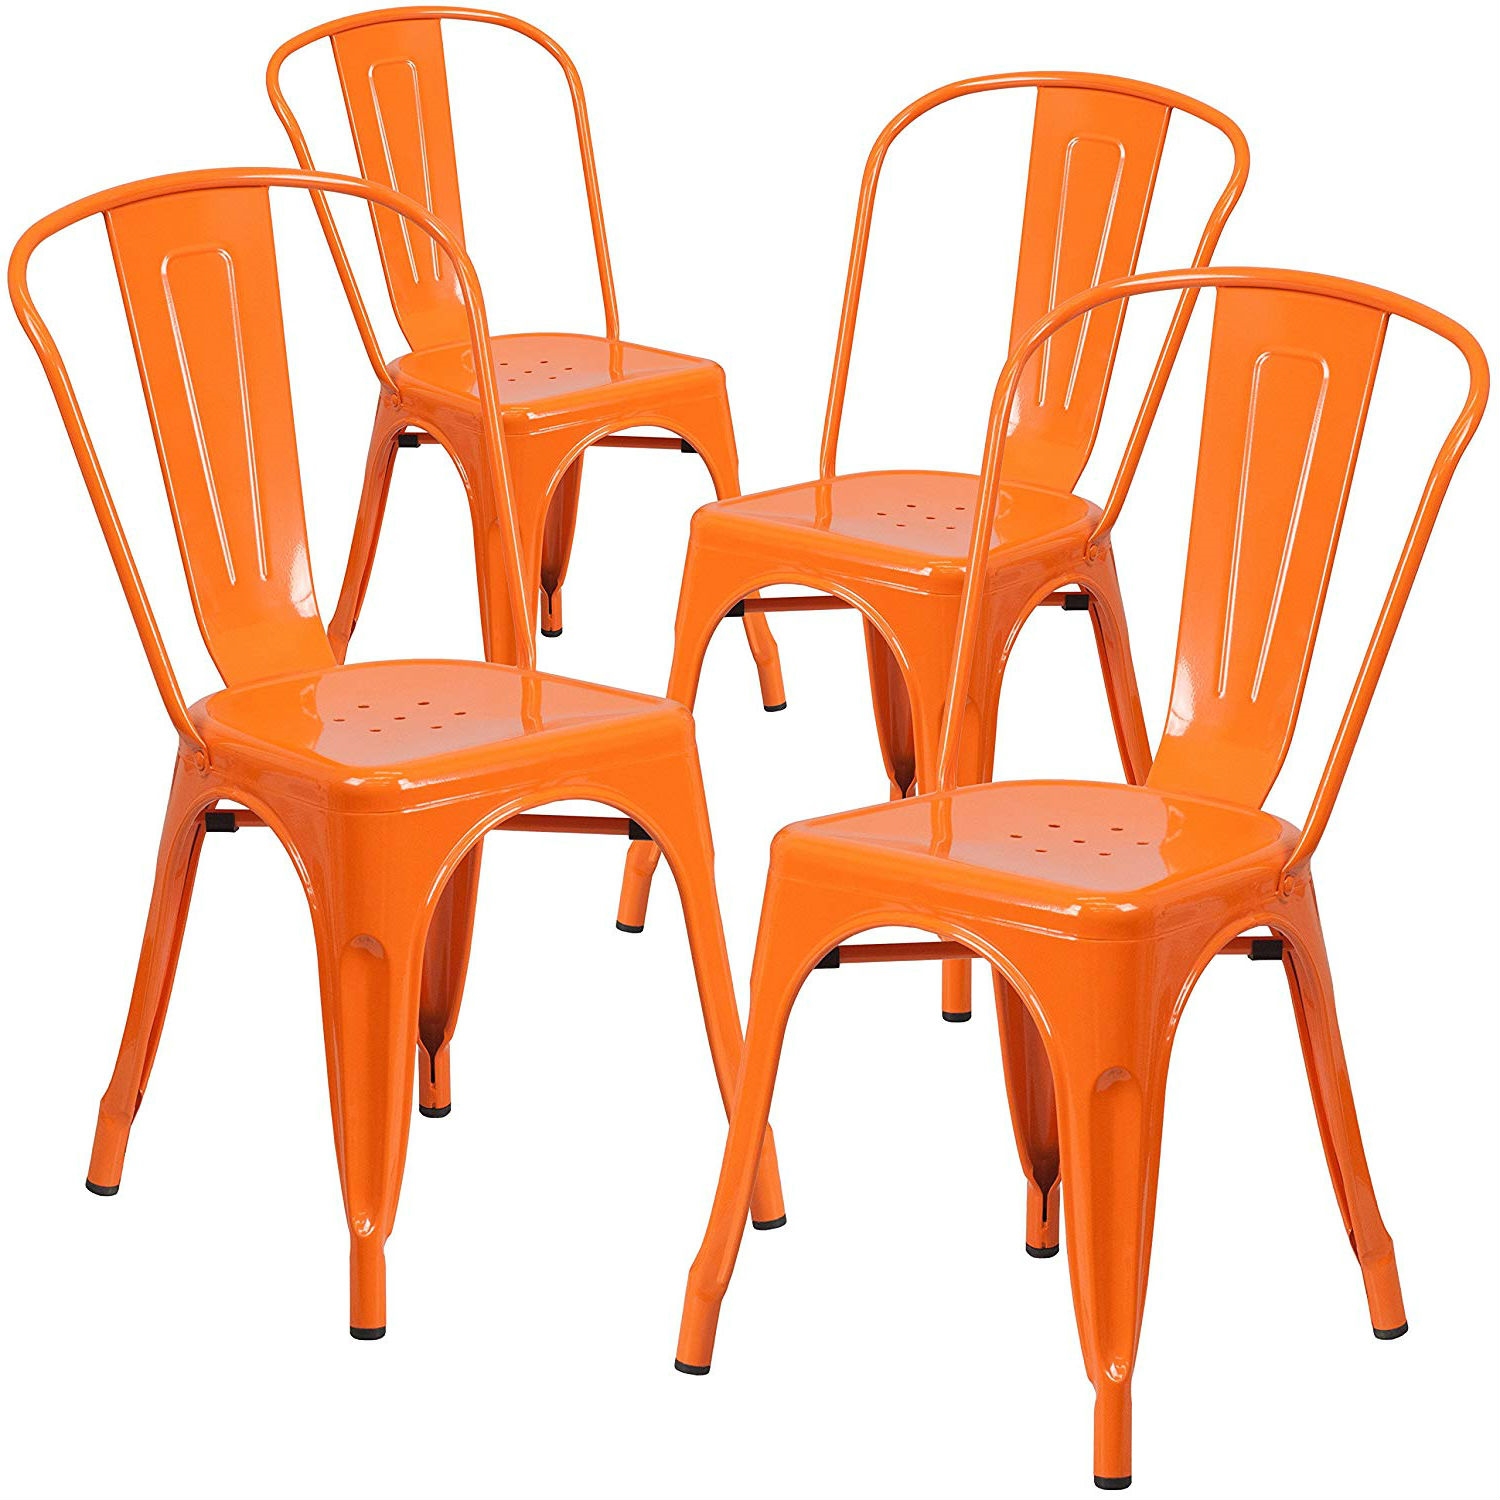 Set of 4 Outdoor Indoor Orange Metal Stacking Bistro Dining Chairs |  FastFurnishings.com